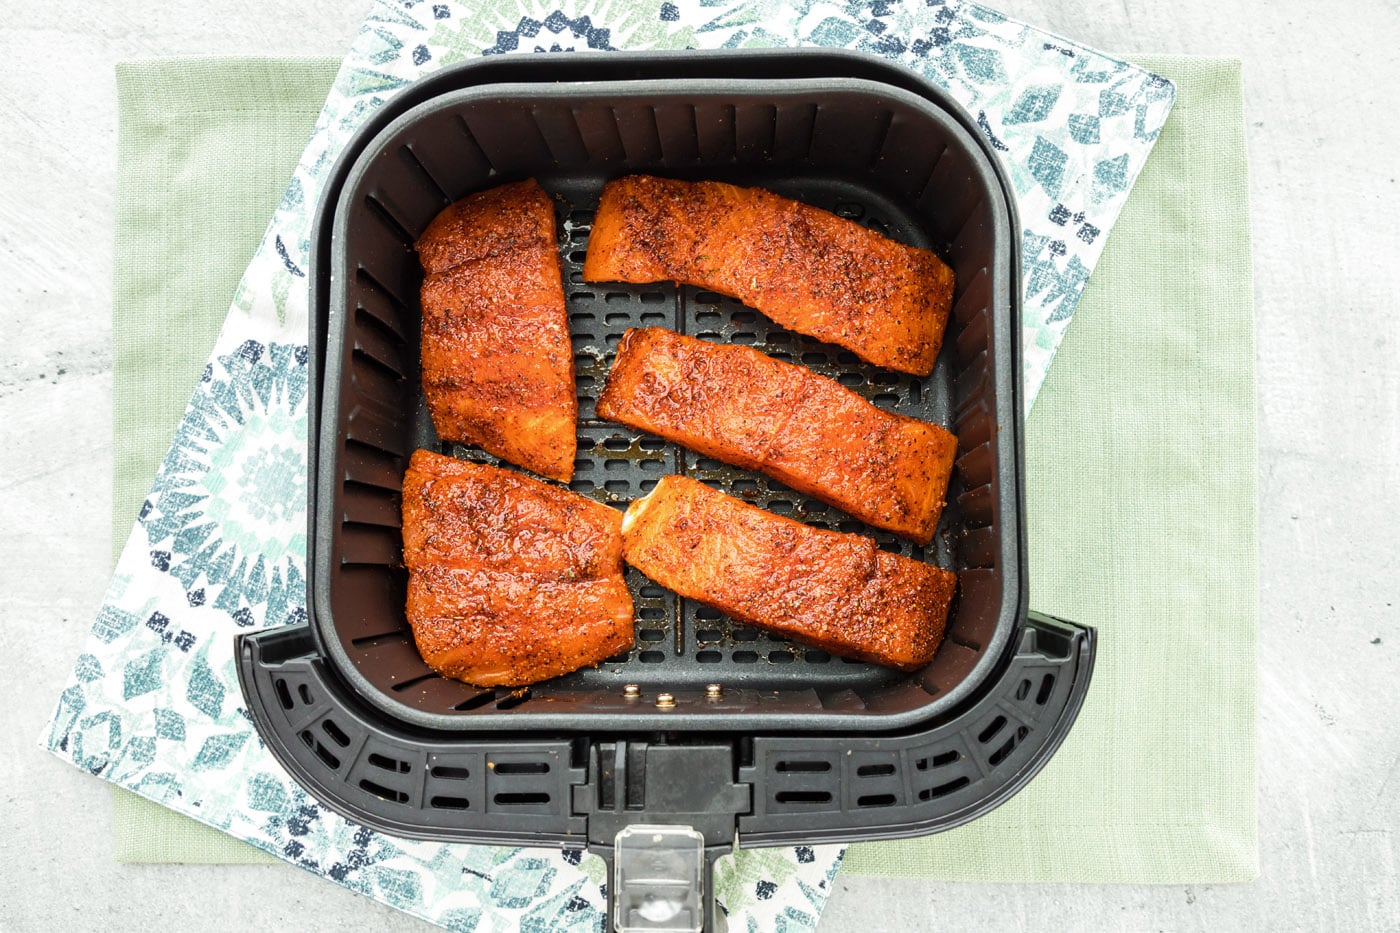 salmon filtes in an air fryer basket